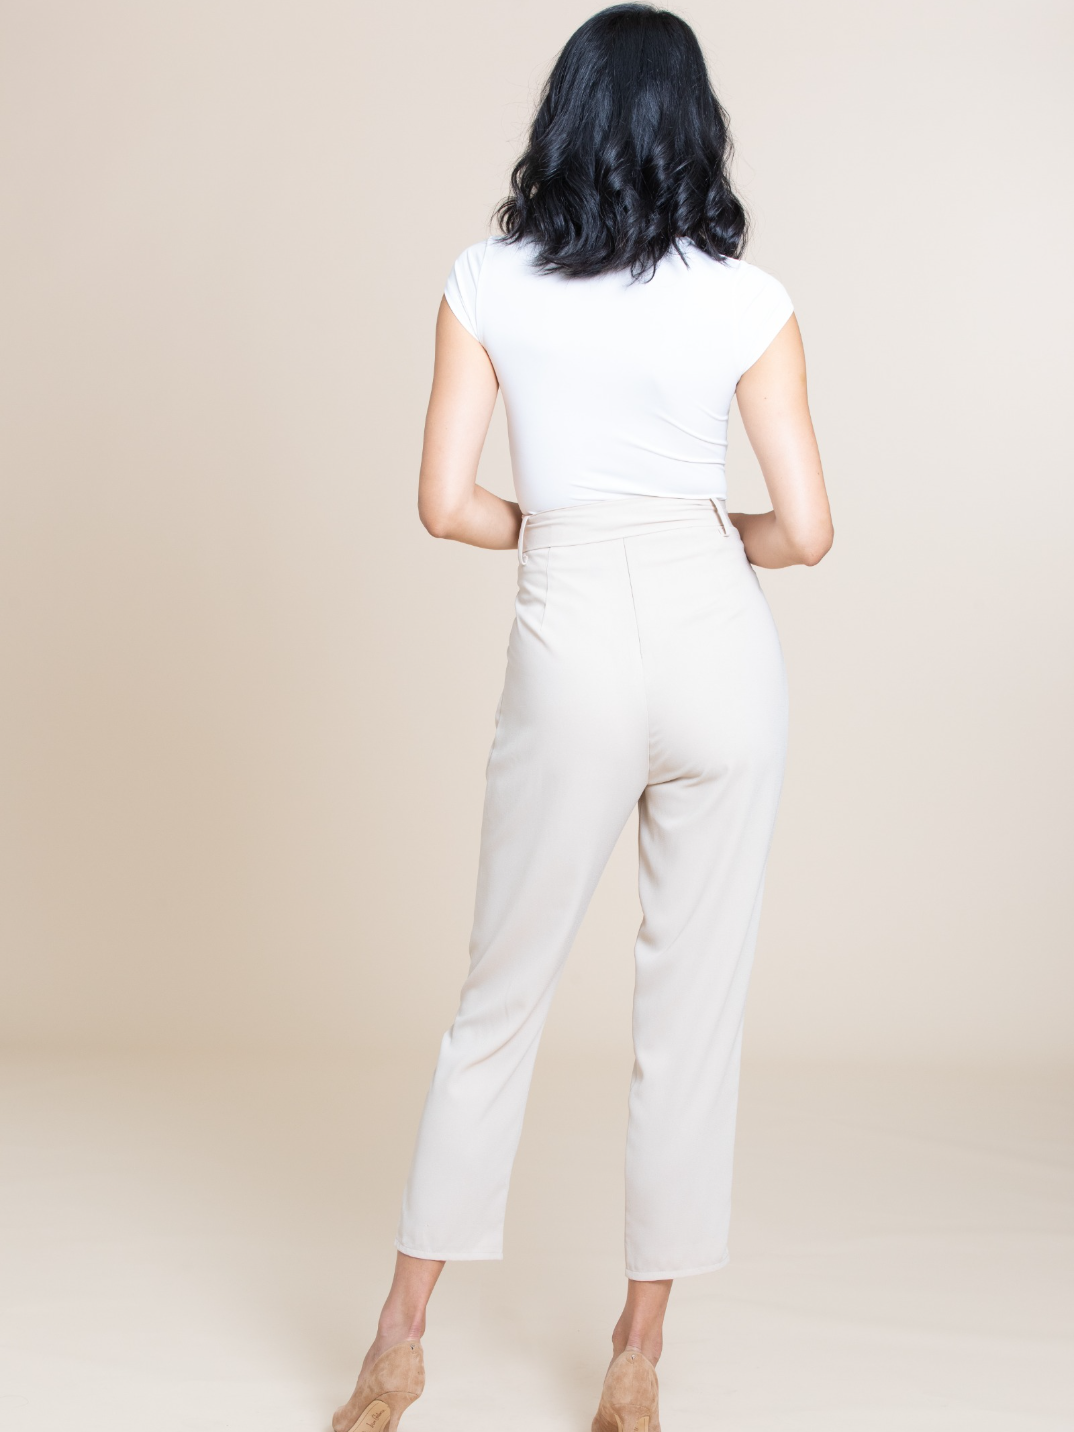 The Kara Bodysuit white Parallel 51 sustainable fashion square neckline comfortable breathable bodysuit